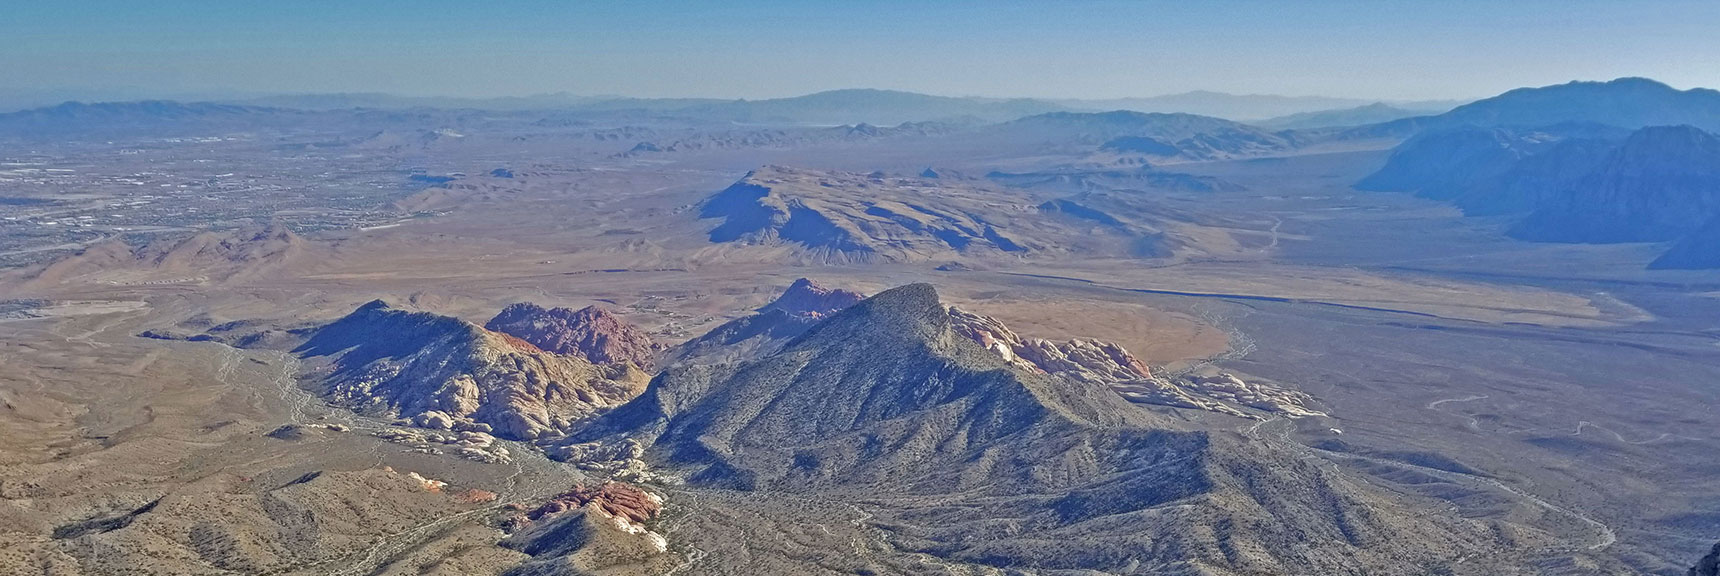 Calico Hills, Turtlehead Peak and Blue Diamond Mountain | La Madre Mountain,, El Padre Mountain, Burnt Peak | La Madre Mountains Wilderness, Nevada